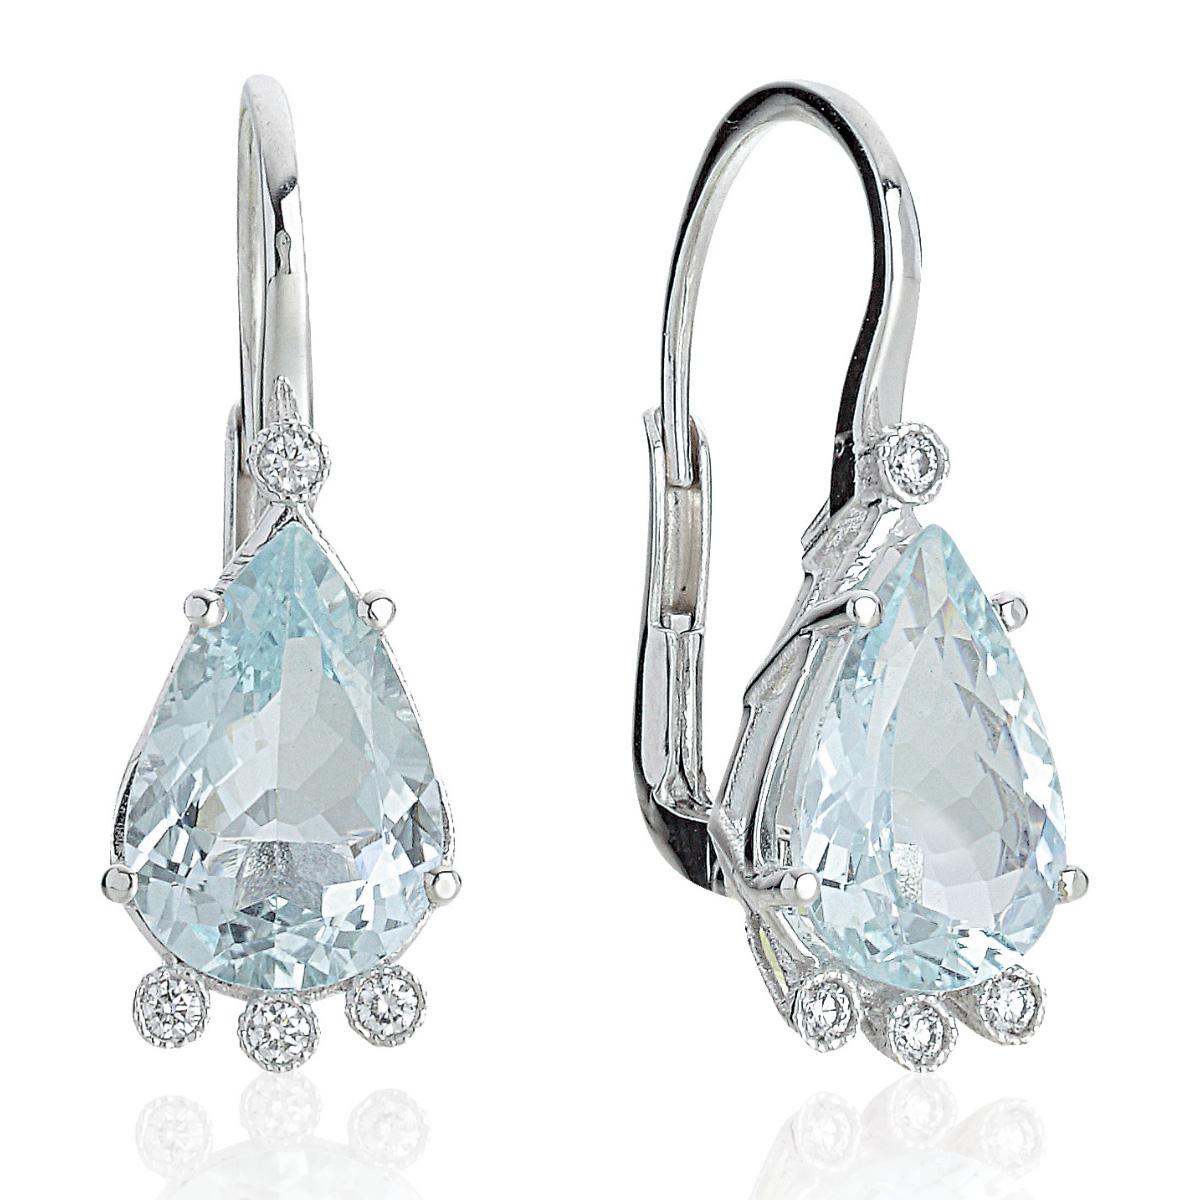 Gold earrings with aquamarine and diamonds - OD361/AC-LB